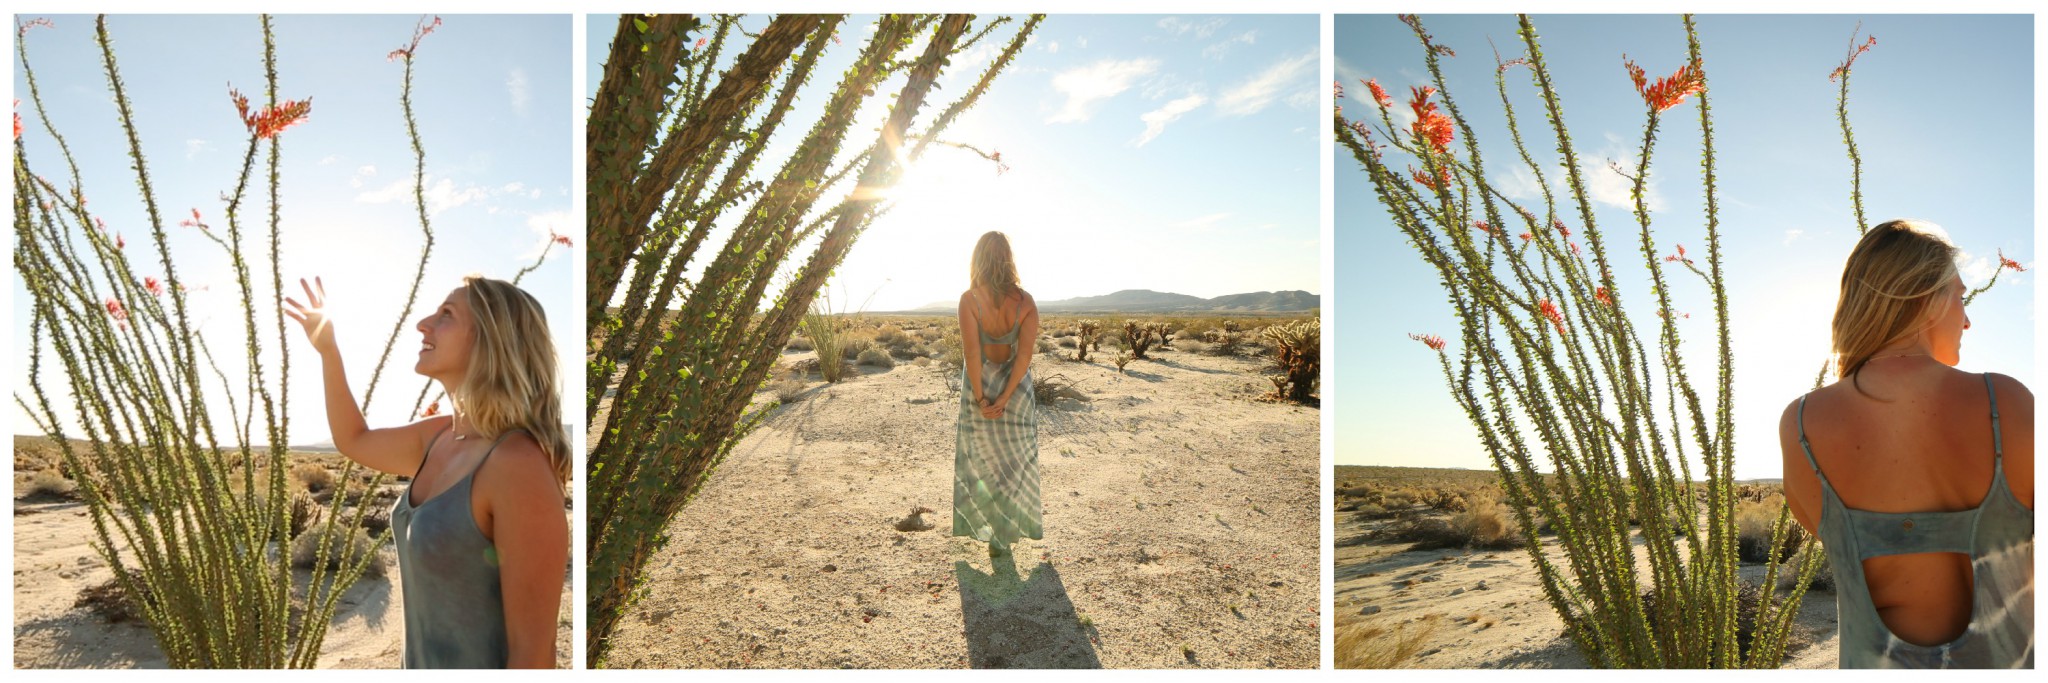 desert collage